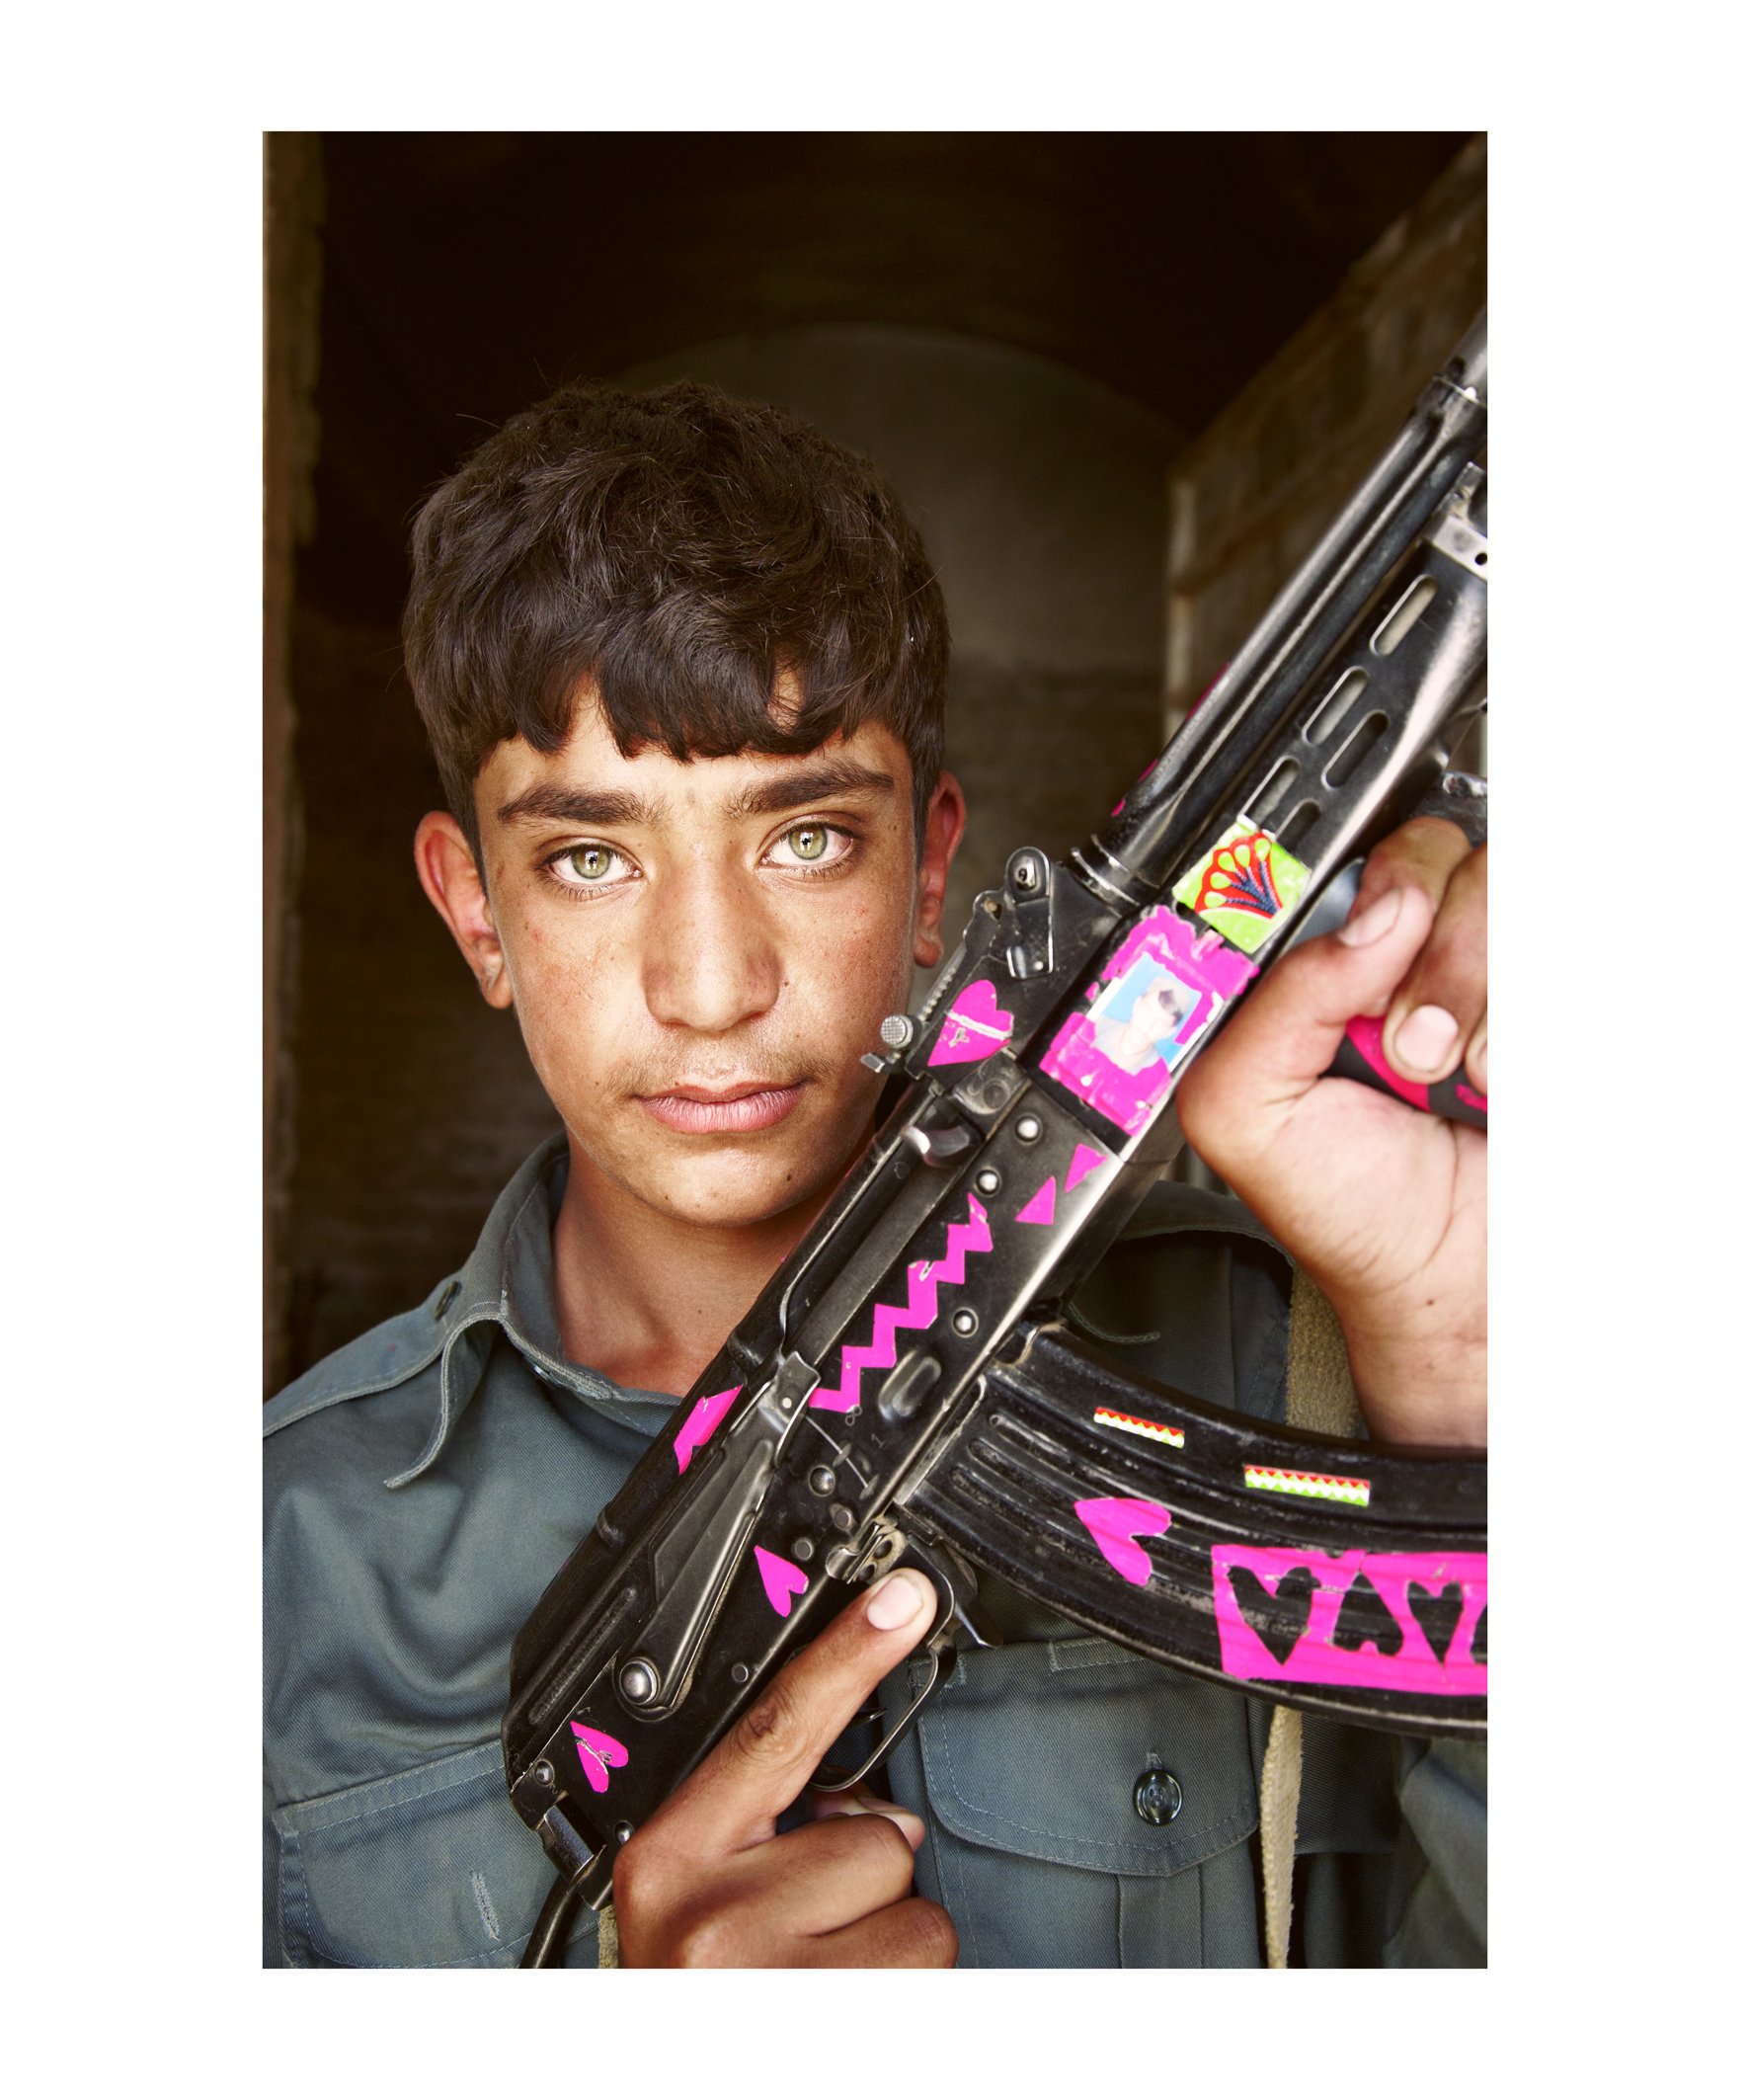 Bran Symondson, Portrait of an Afghan Boy holding a Decorated AK-47, 2010.jpg